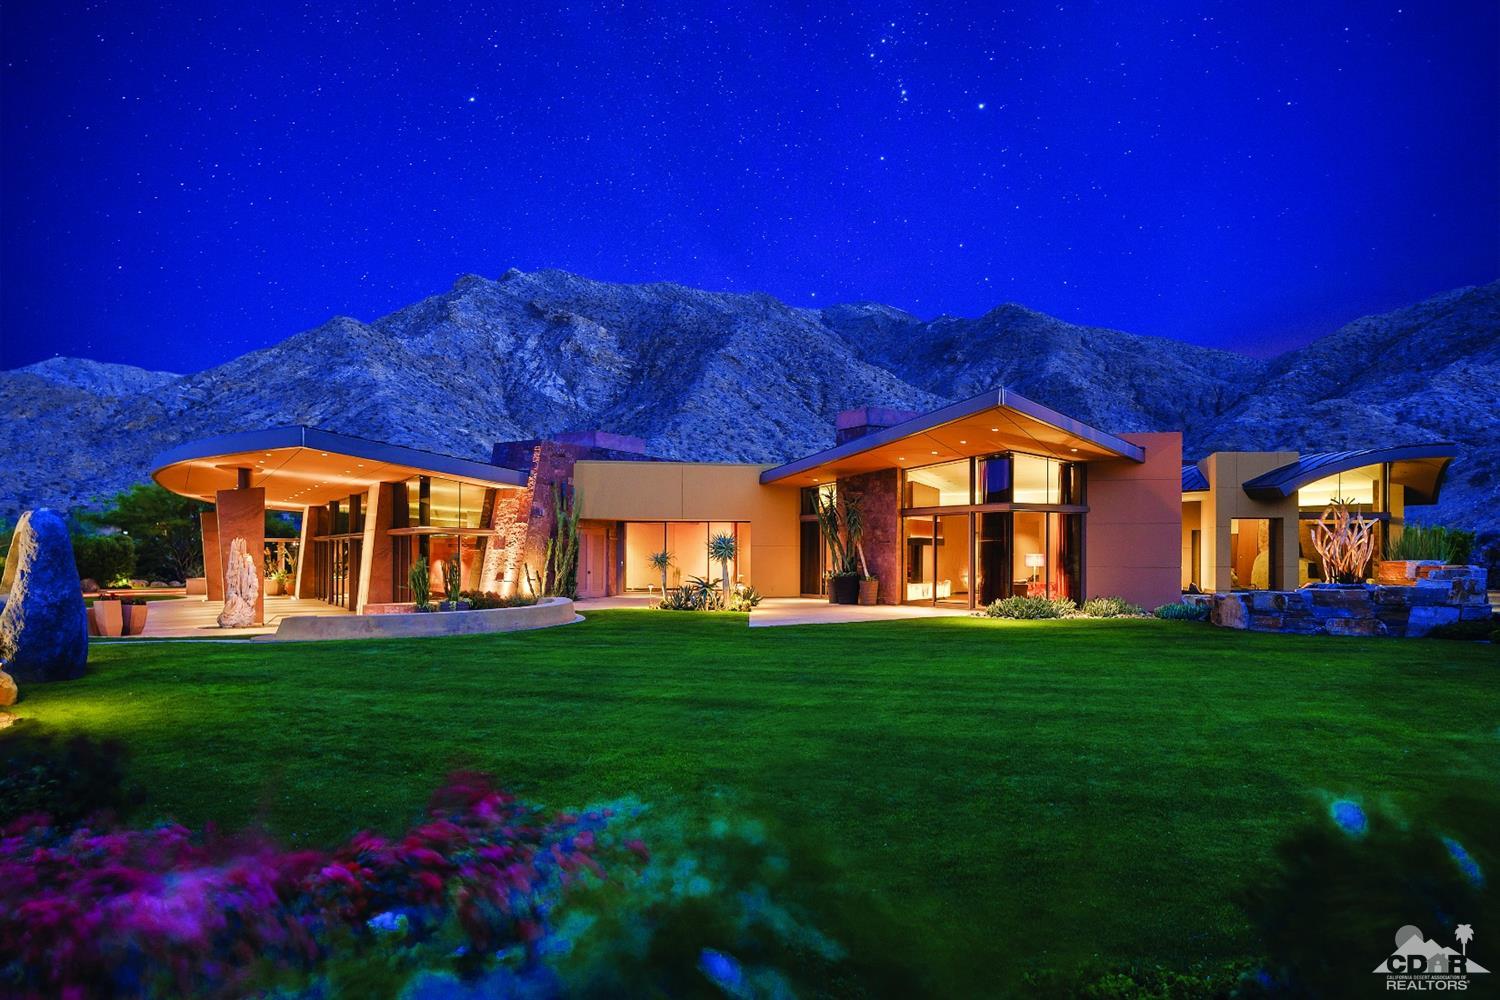 Mirada Estates Luxury homes for sale - Rancho Mirage